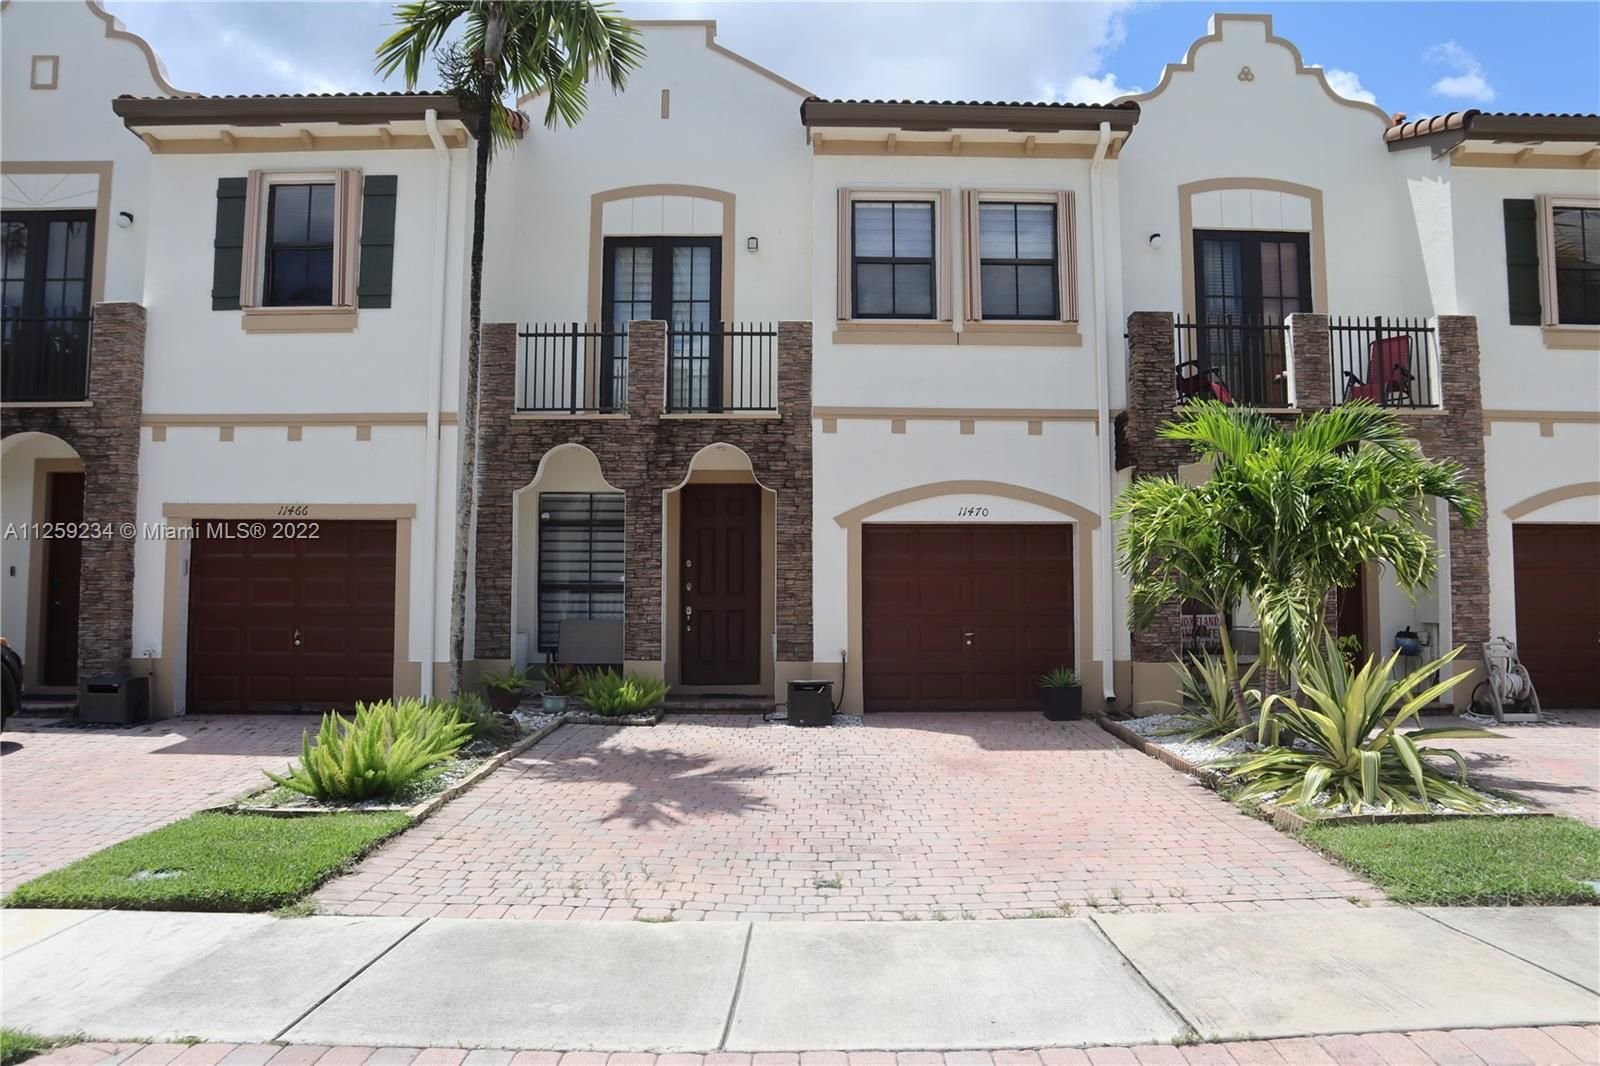 Real estate property located at 11470 237th Ter, Miami-Dade County, Miami, FL